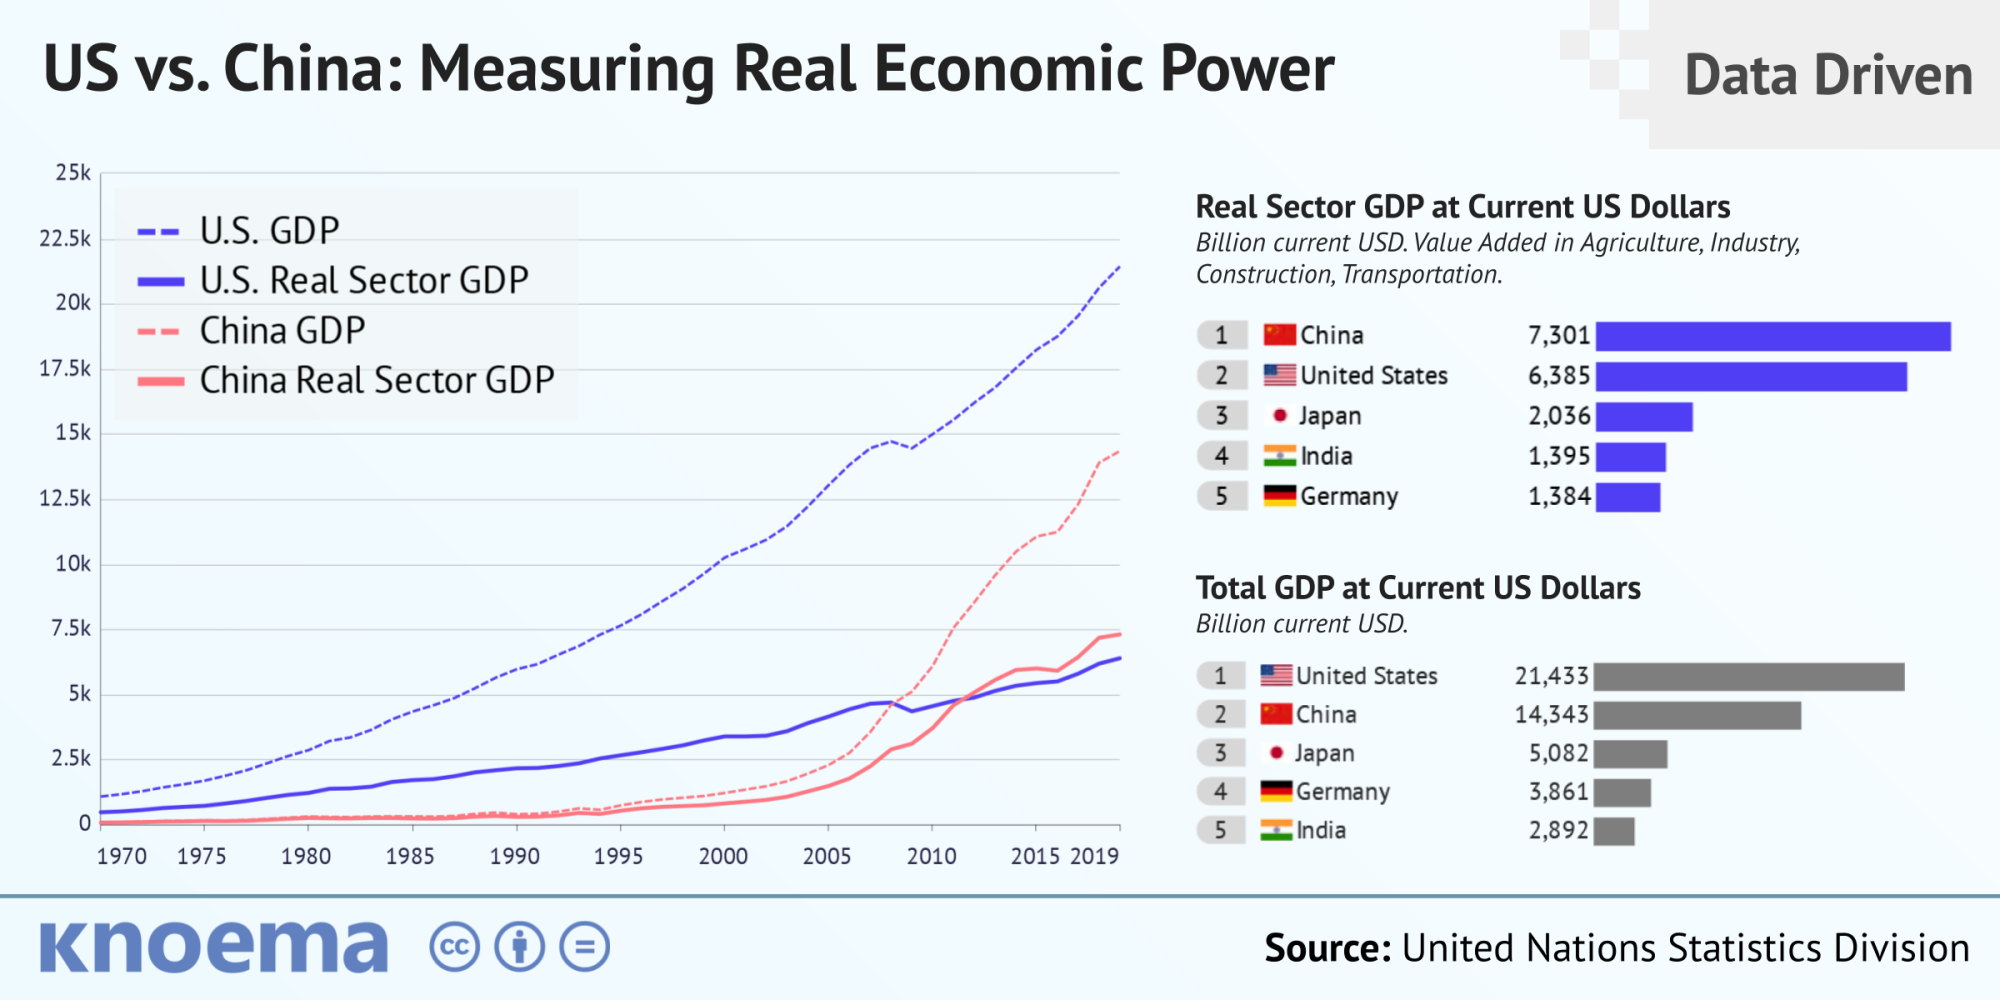 Knoema_Data_Driven_US_China_Real_Economic_Power.png